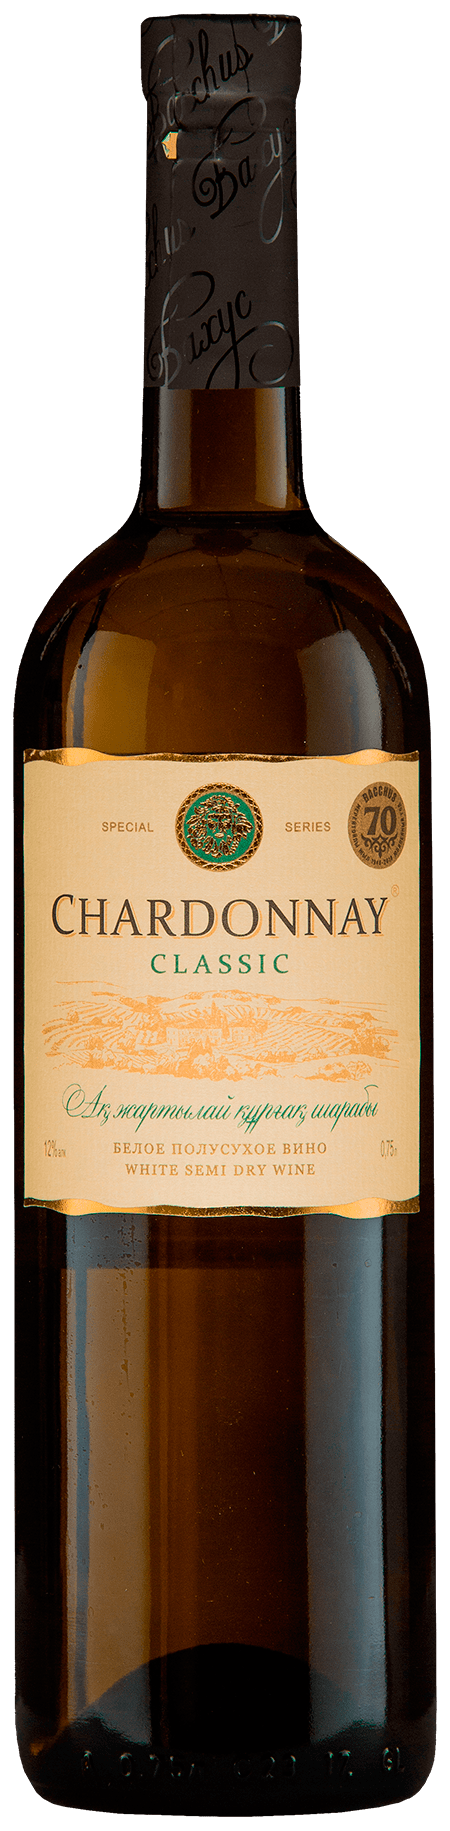 Chardonnay classic